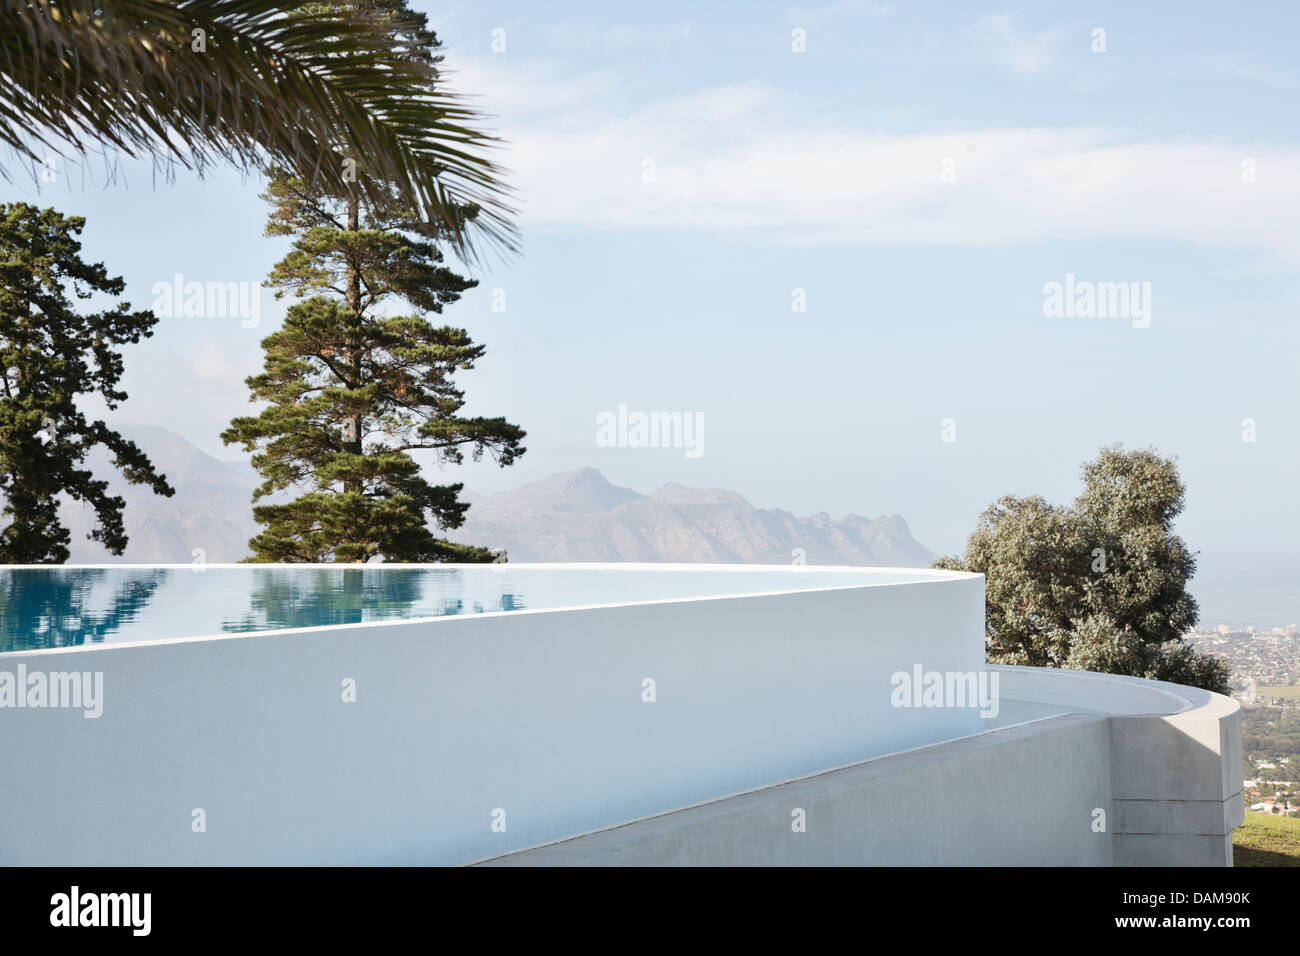 Infinity pool overlooking trees and hillside Stock Photo